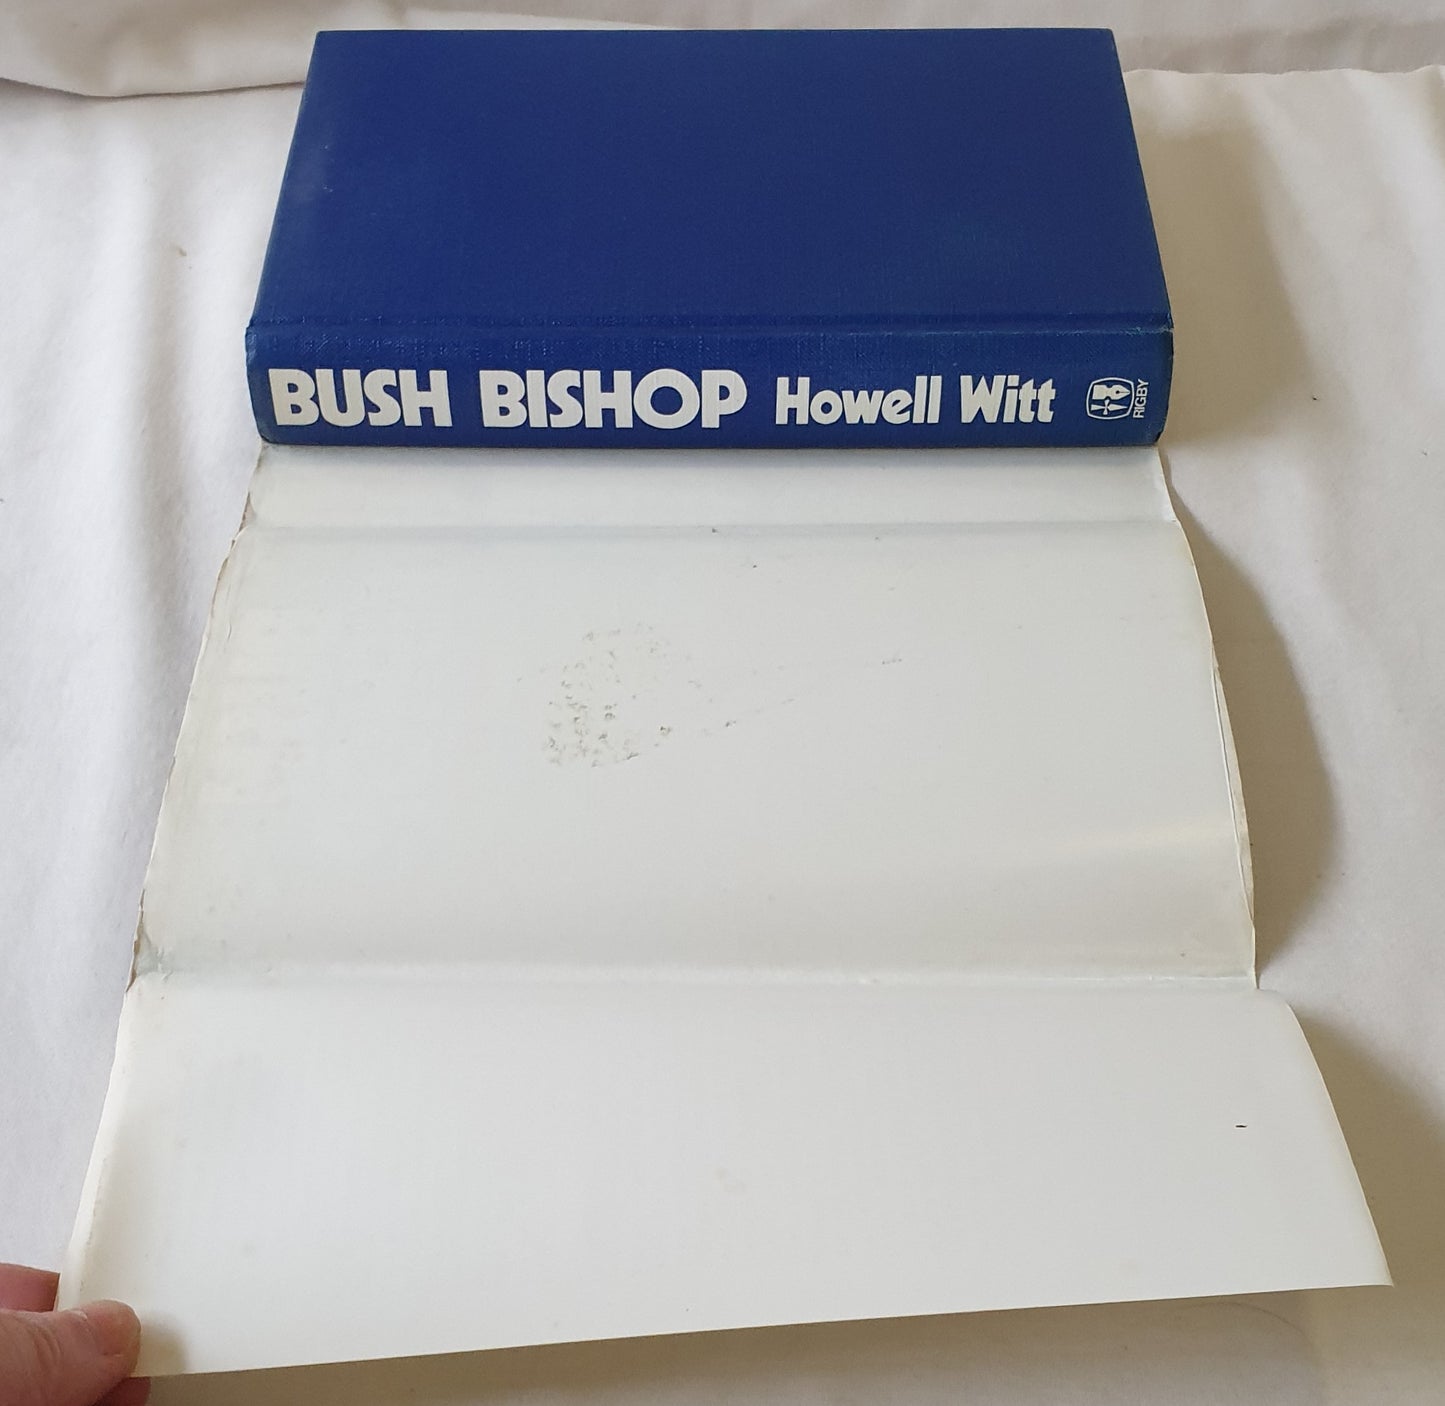 Bush Bishop  by Howell Witt